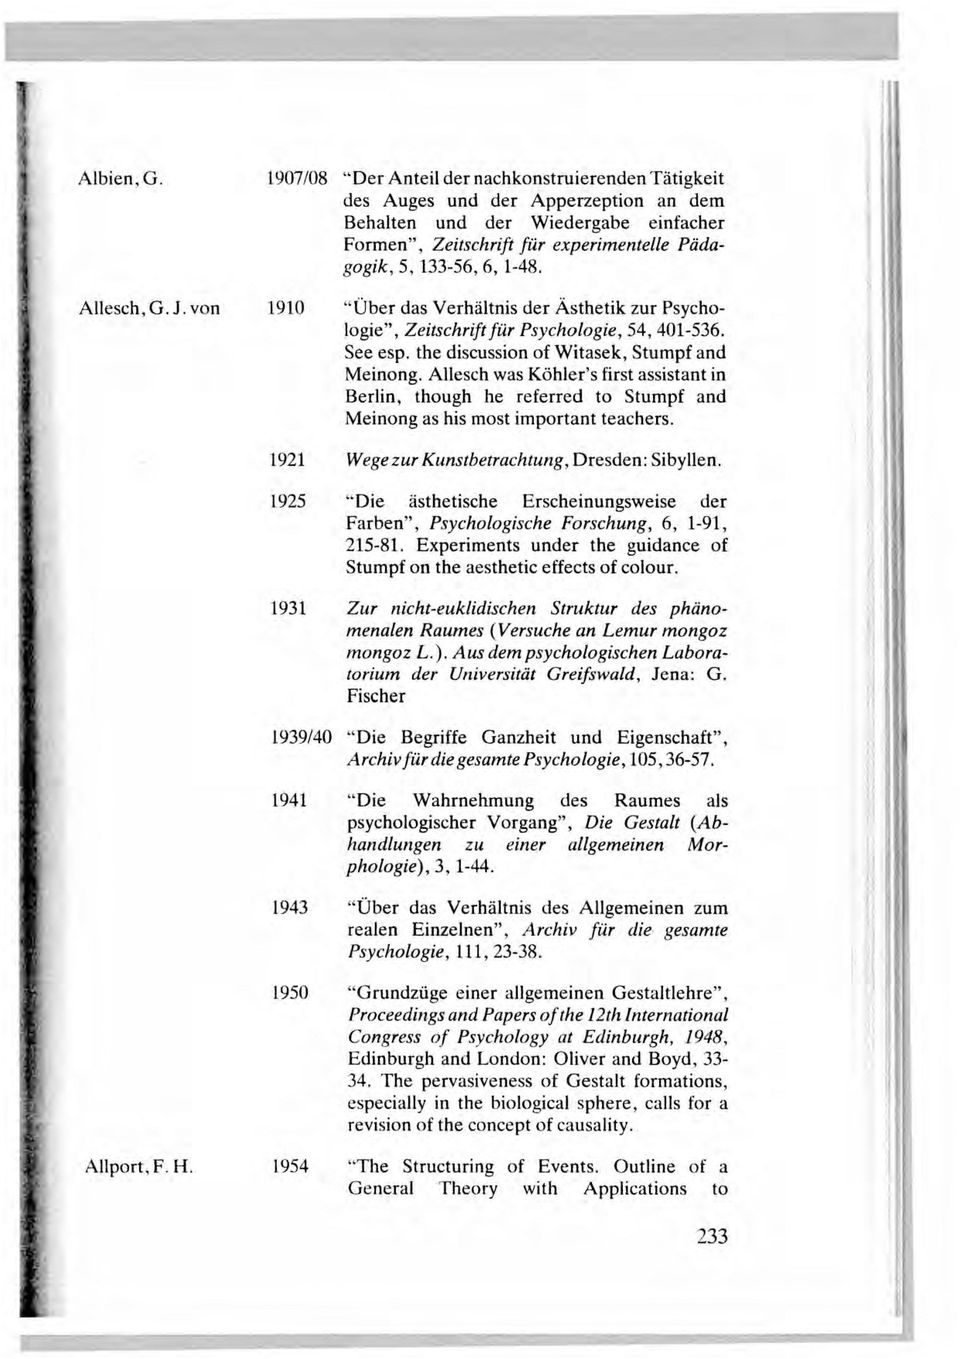 1-48. 1910 "Uber das Verhaltnis der Asthetik zur Psychologie", Zeitschrift fur Psychologie, 54, 401-536. See esp. the discussion of Witasek, Stumpf and Meinong.